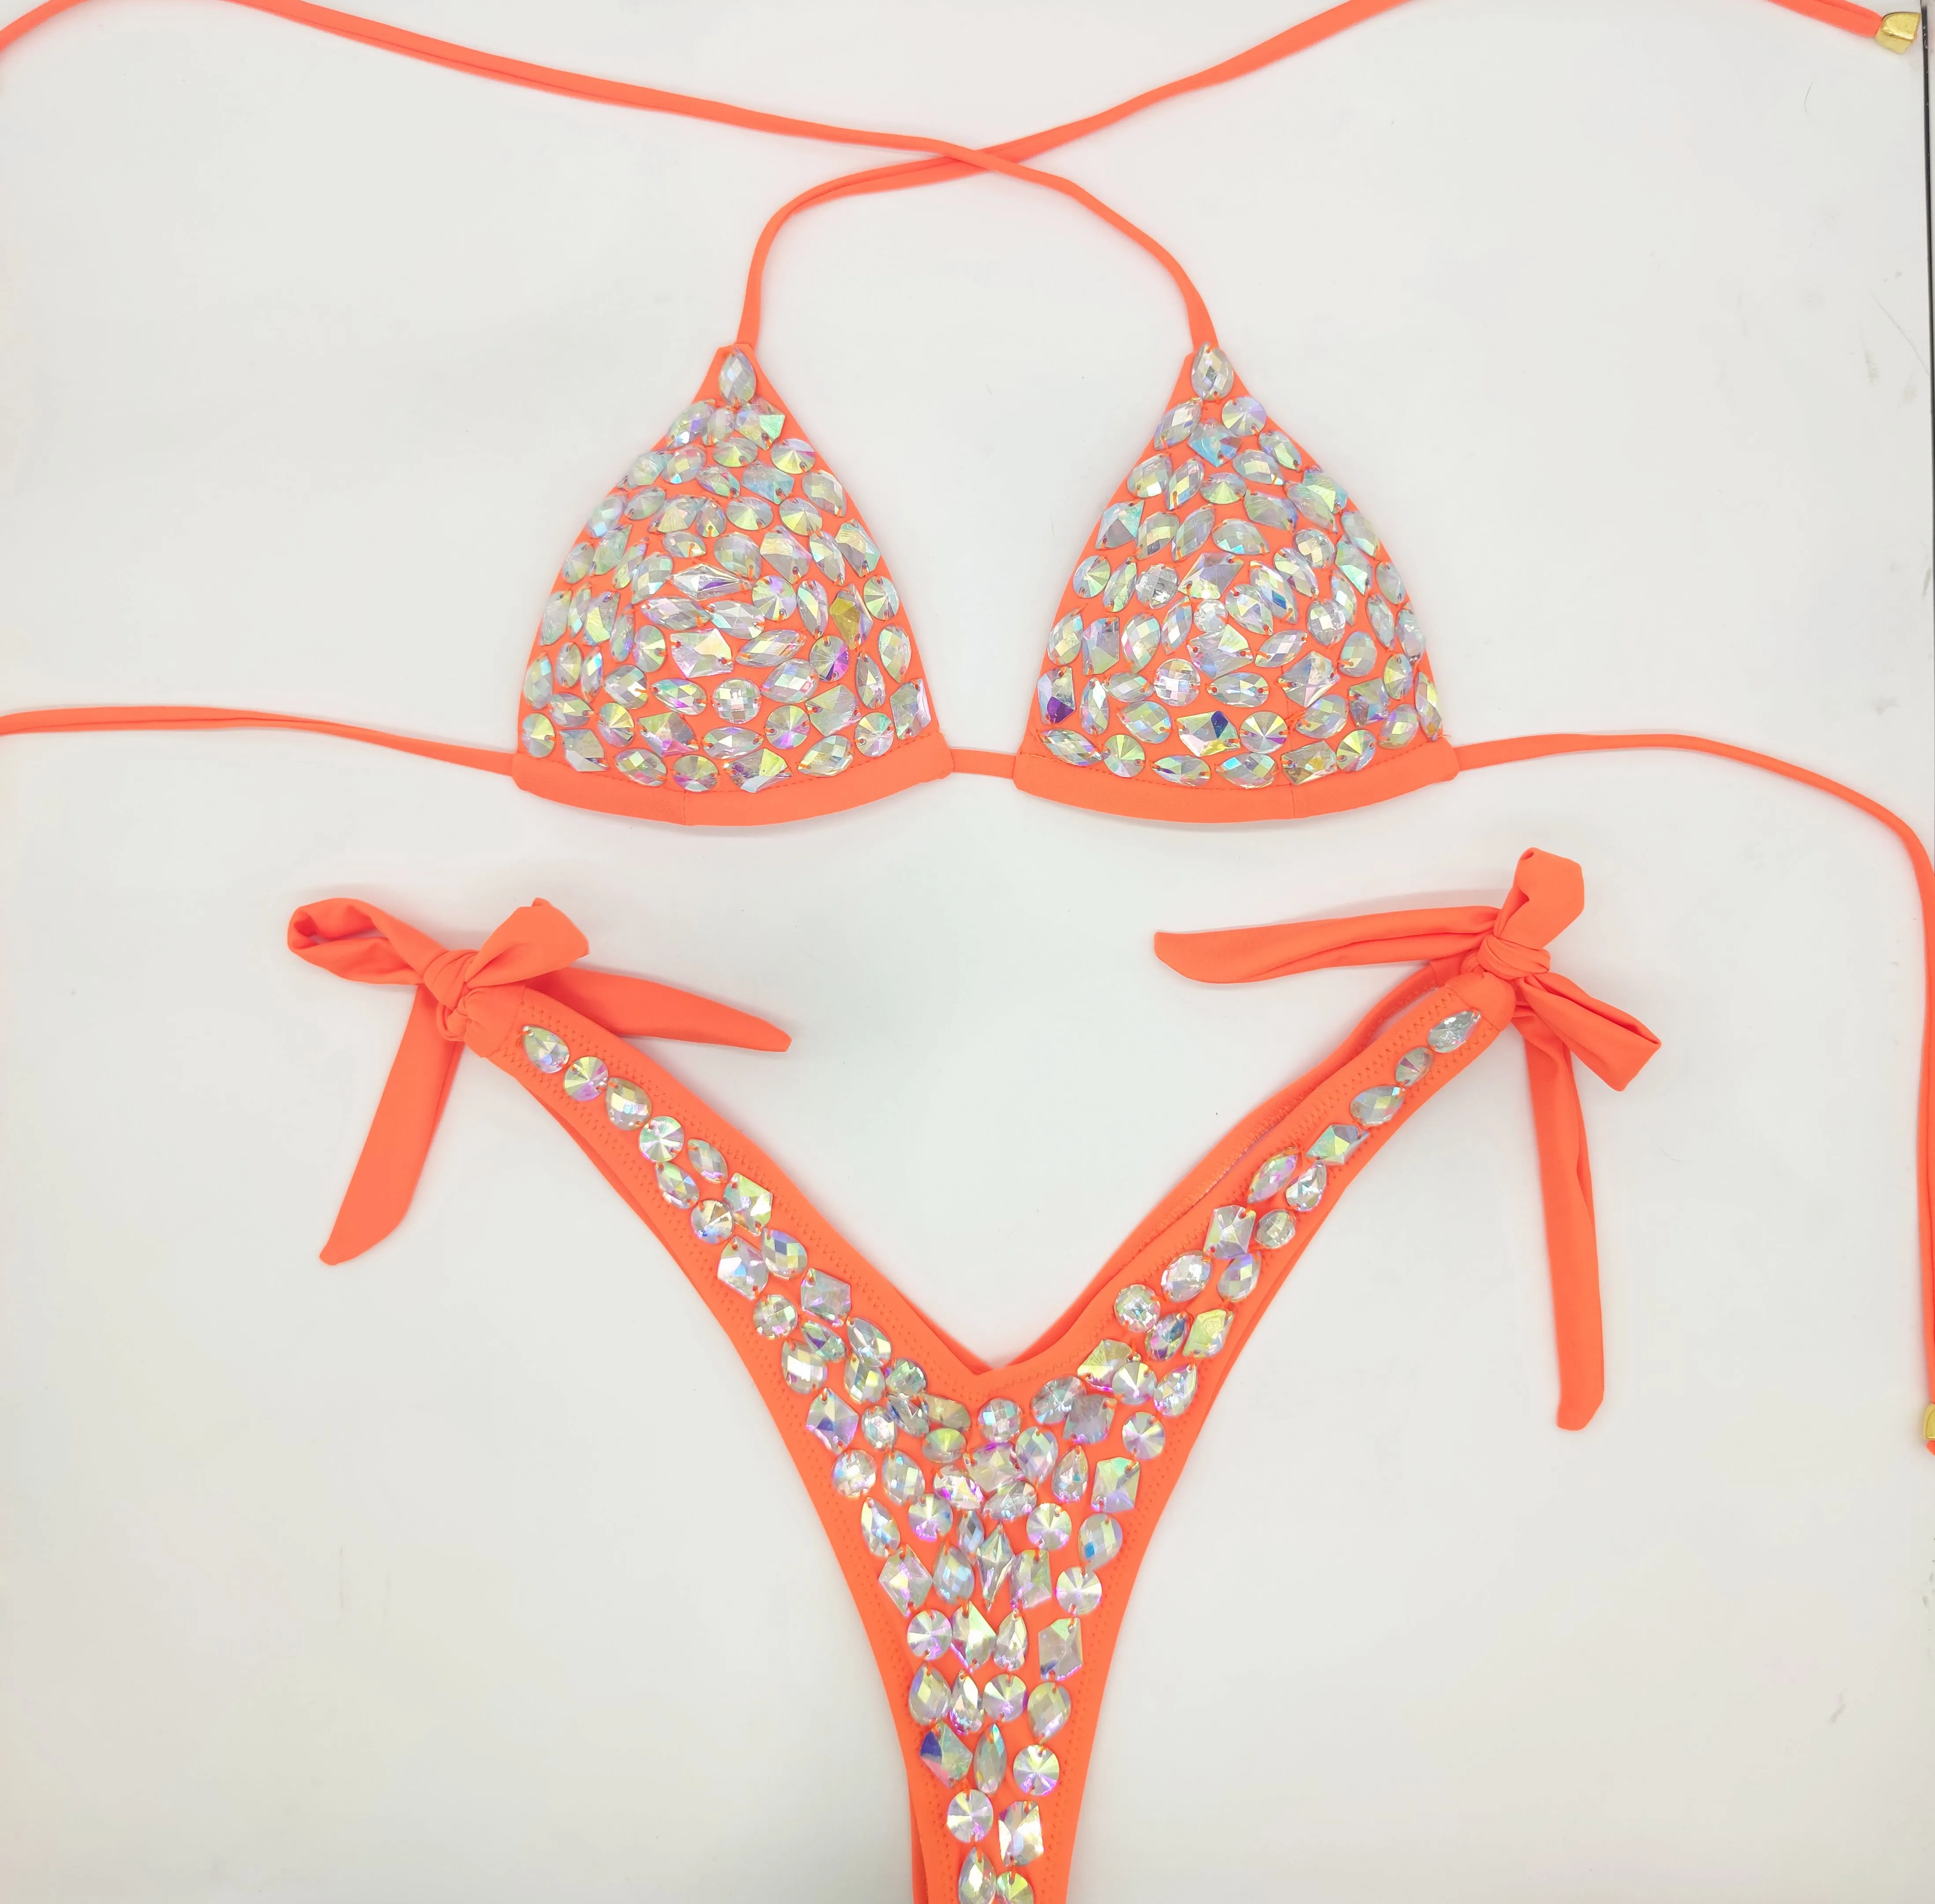 2021 Venus Urlaub Diamant Bikini Set Strass Badebekleidung Kristall Badeanzug sexy Frauen Biquini Bling Steine Badeanzug81262434874087